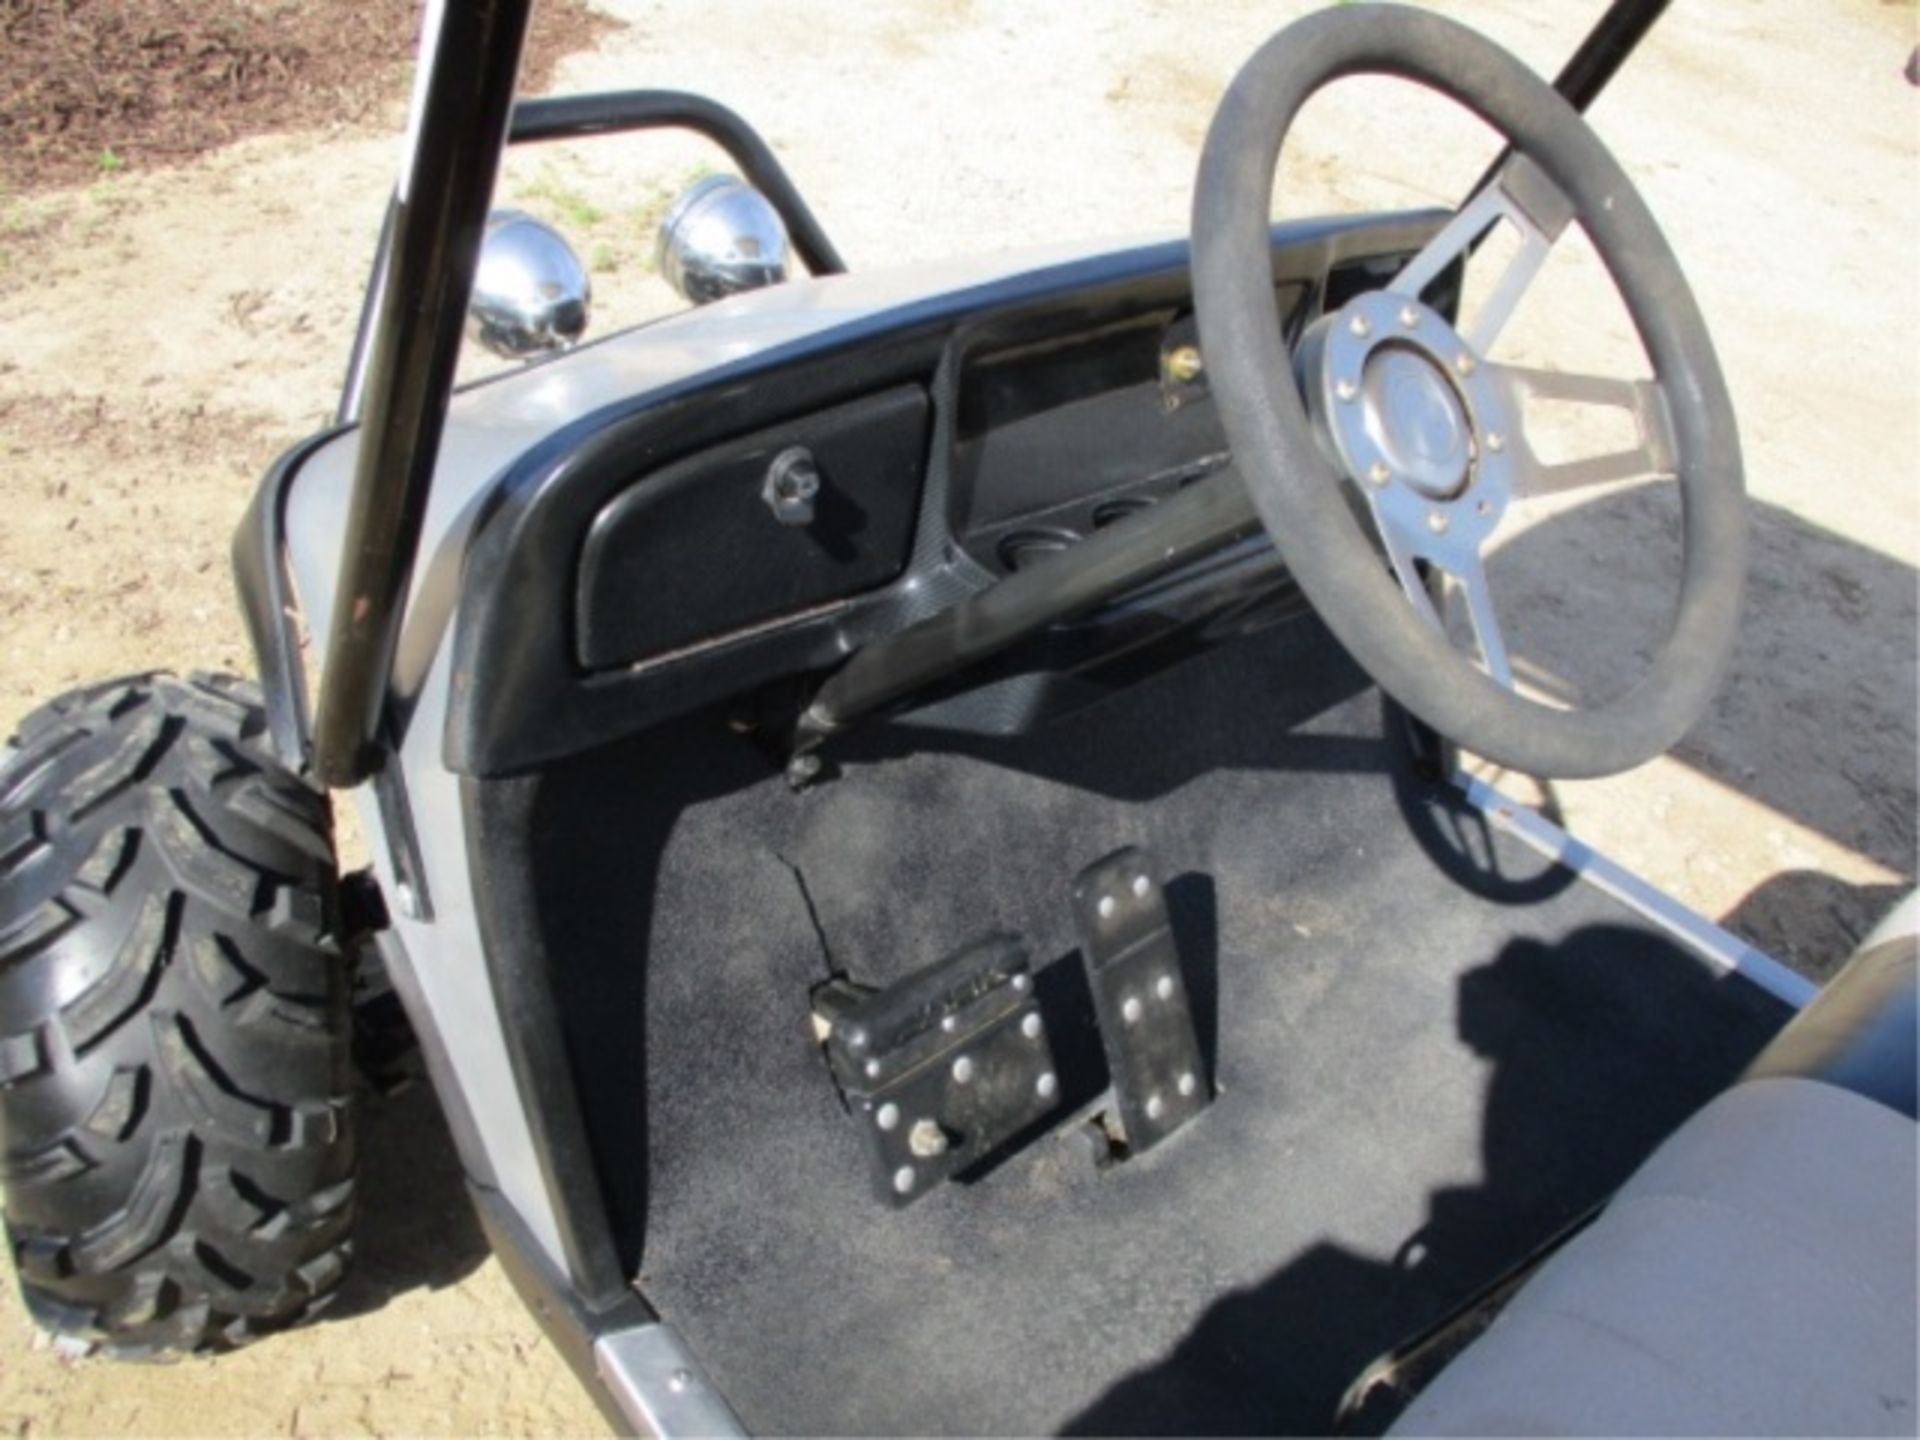 EzGo Golf Cart, 2017 Predator 670cc Gas Engine, Lift Kit, Custom Roll-Cage W/Canopy, S/N: 912224 - Image 15 of 39